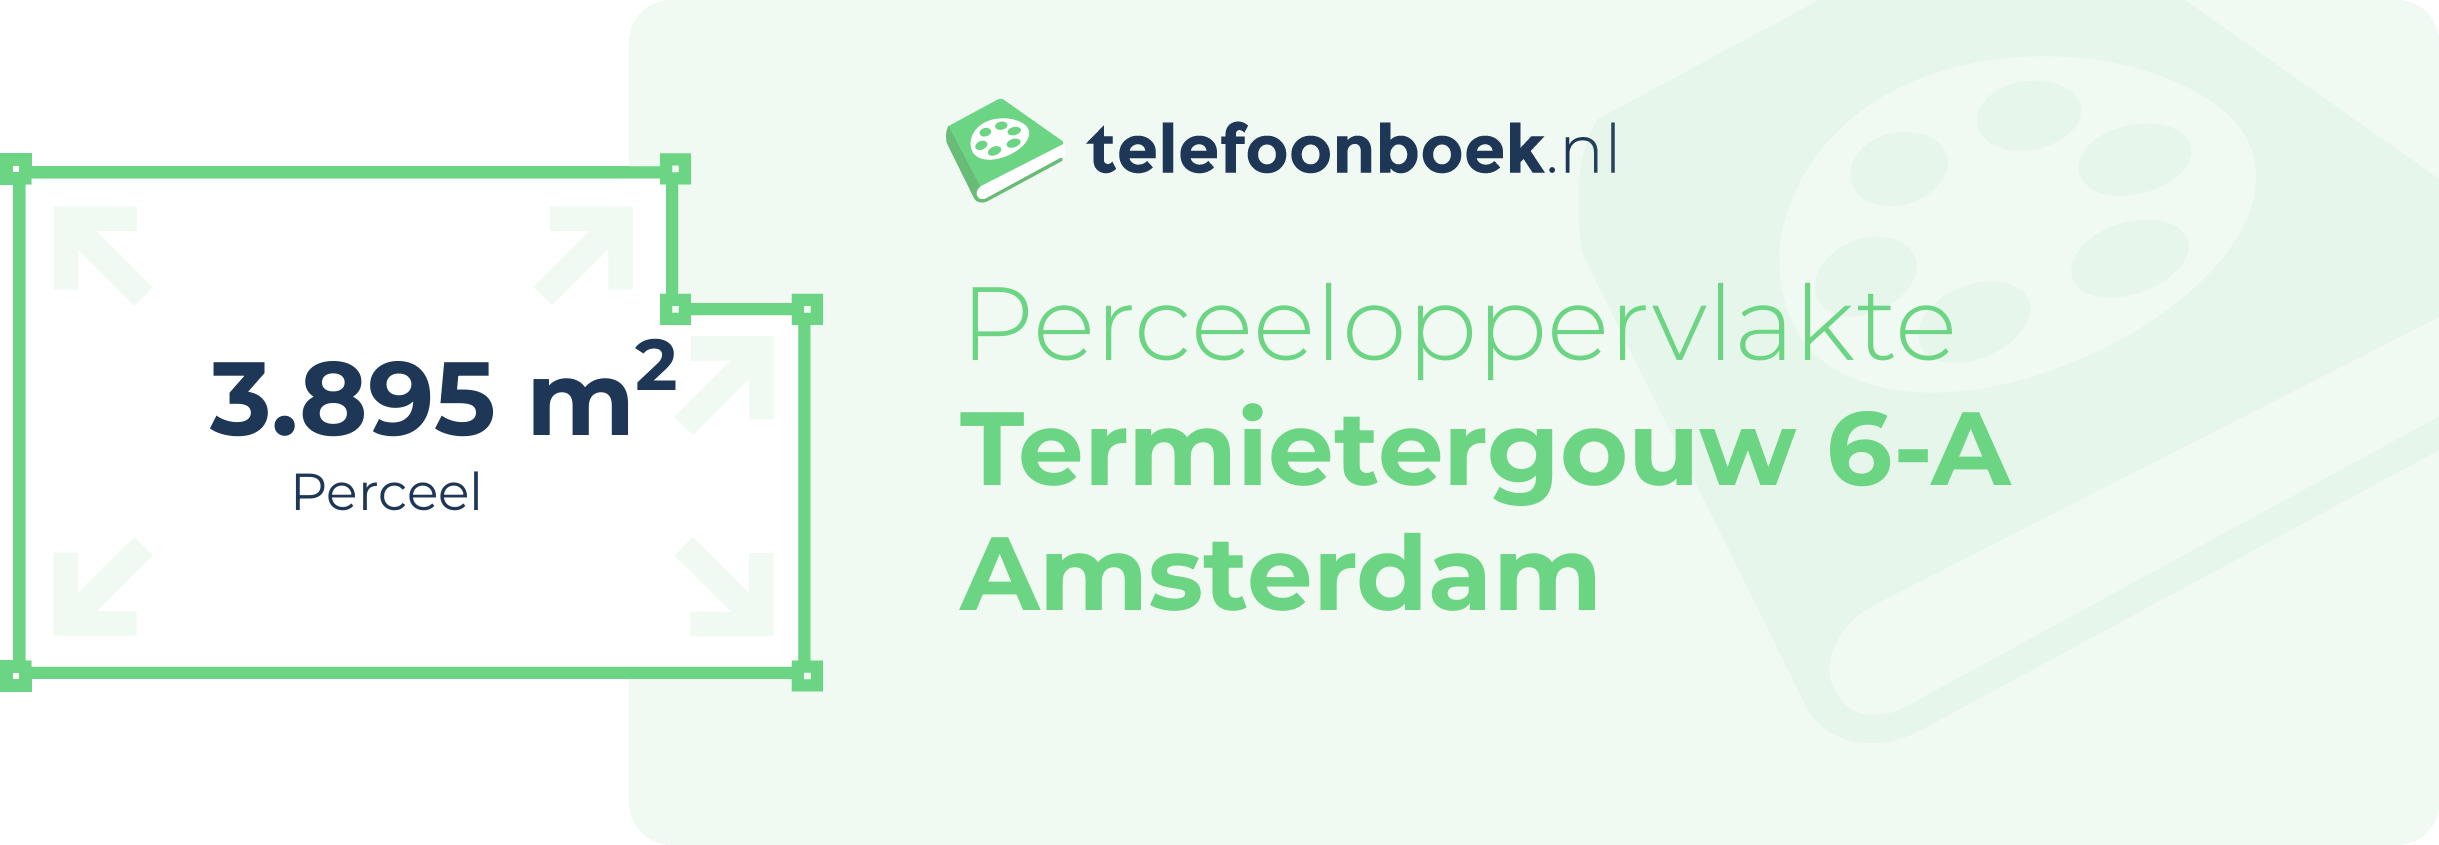 Perceeloppervlakte Termietergouw 6-A Amsterdam